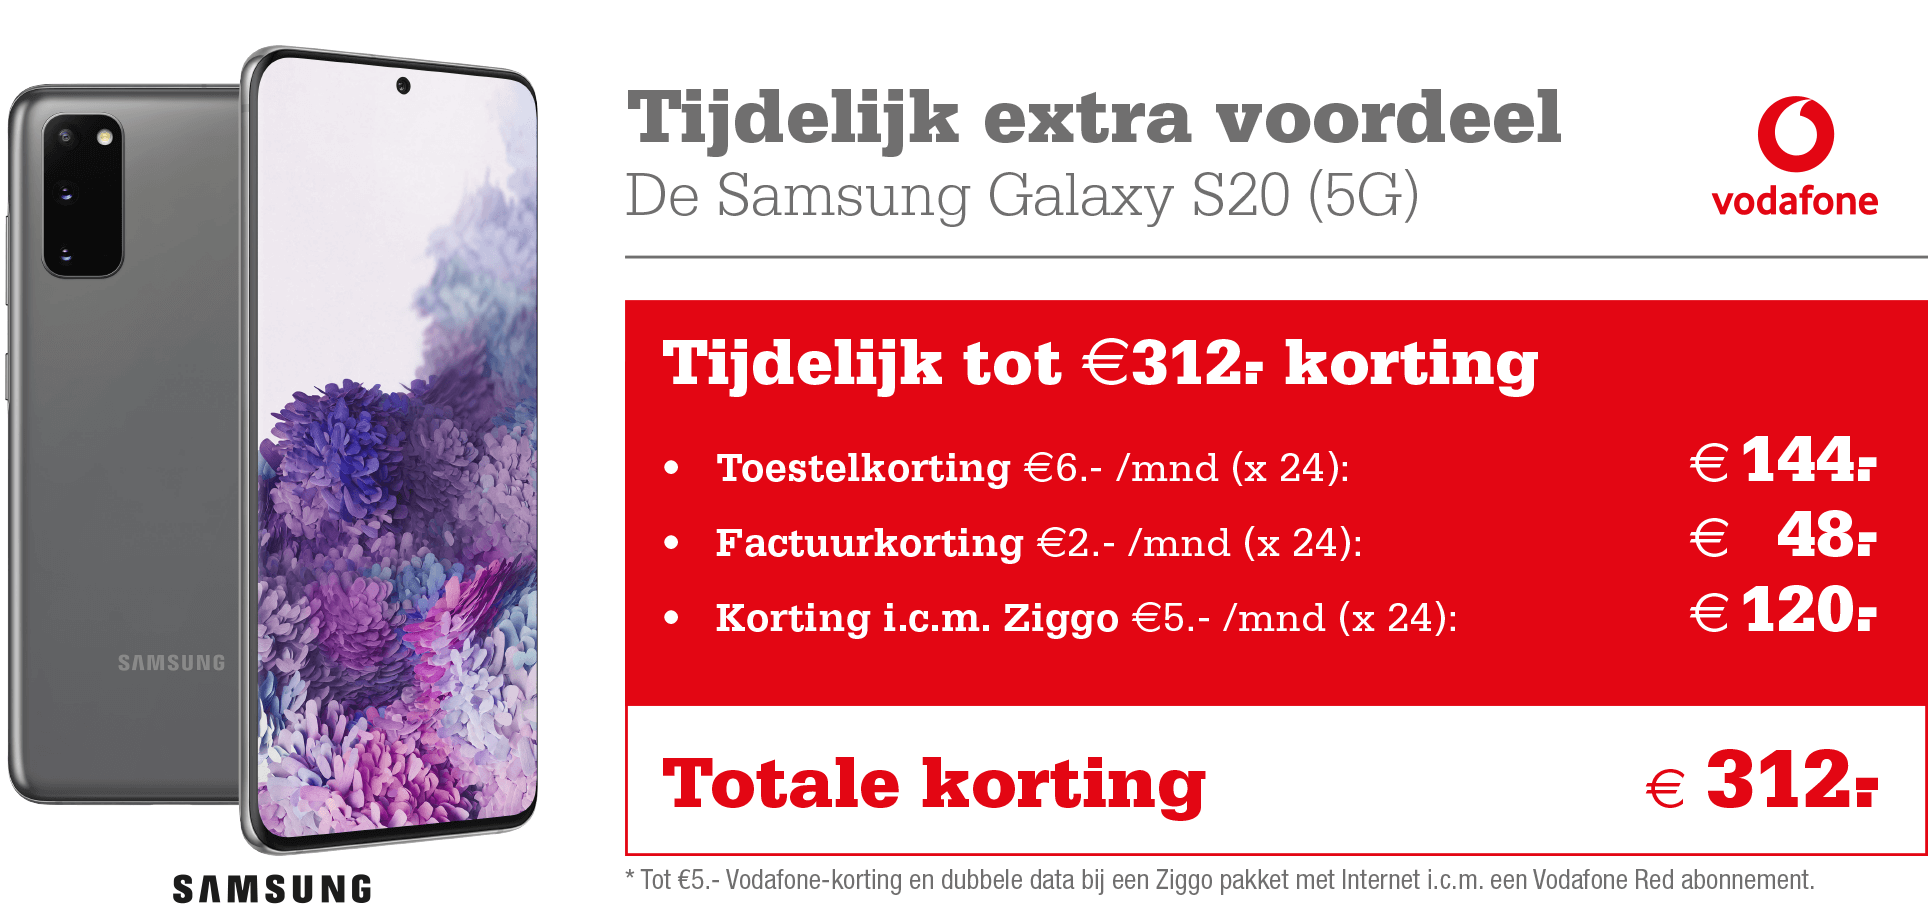 amusement Profeet Lichaam De Samsung Galaxy S20 (5G): nu tot €312,- korting icm Vodafone |  Telecombinatie